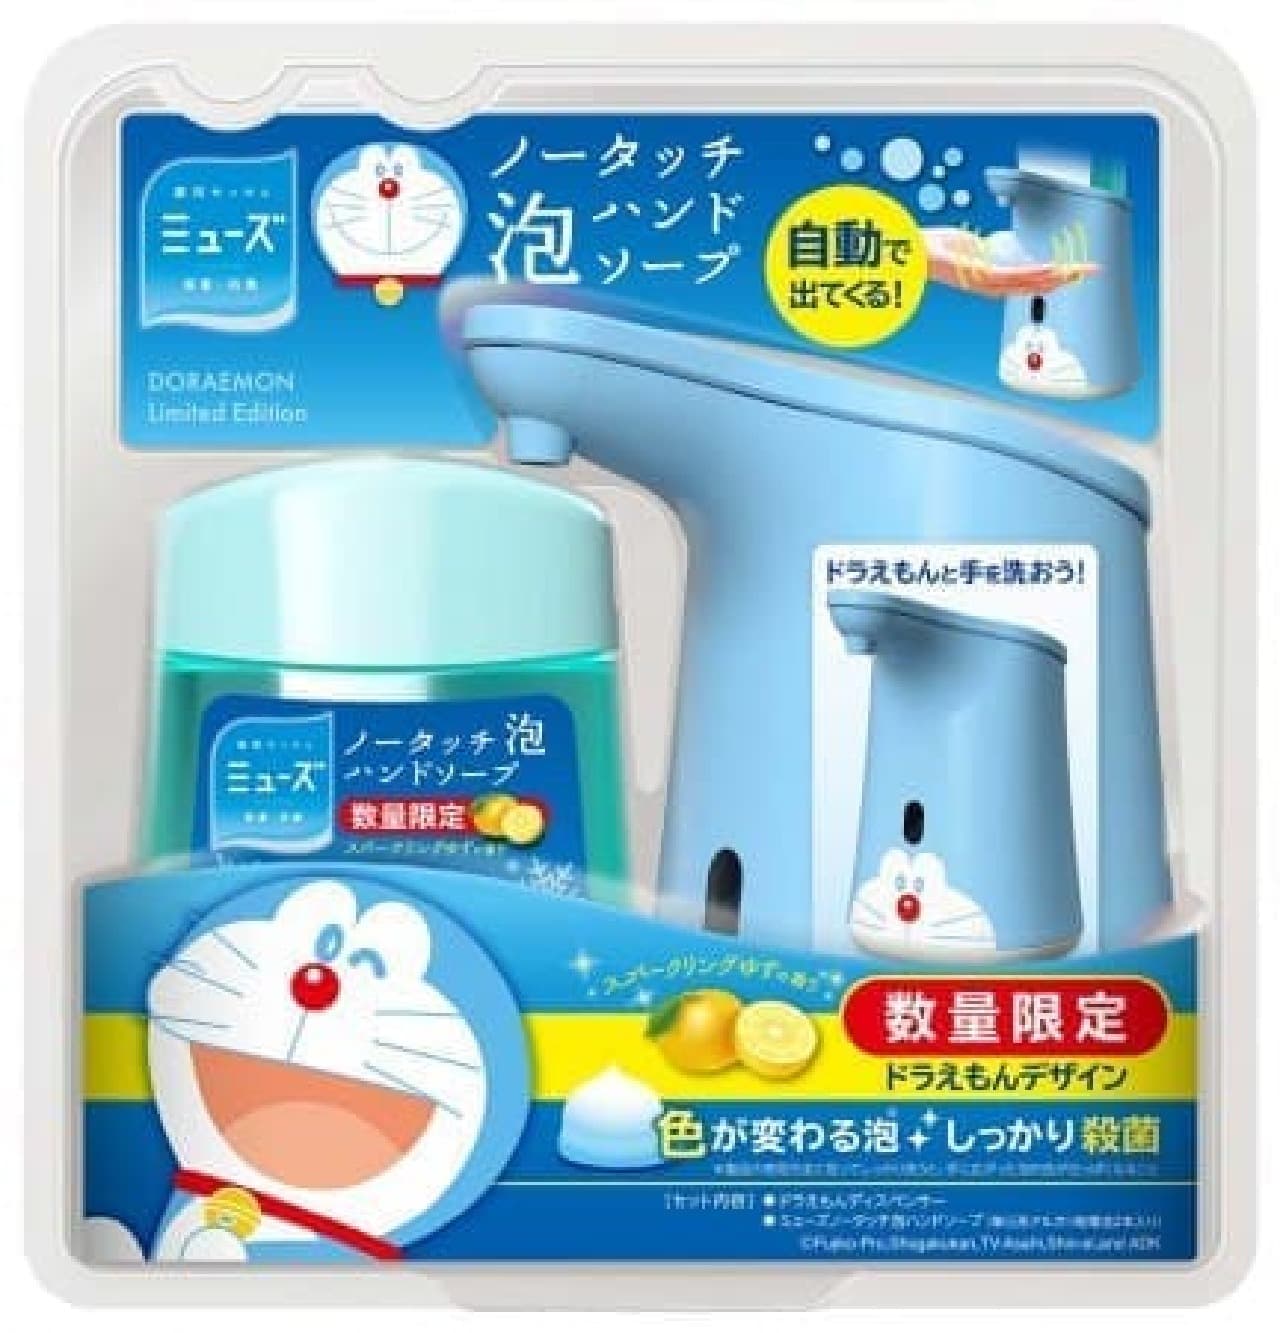 Muse No Touch Foam Hand Soap Doraemon Design